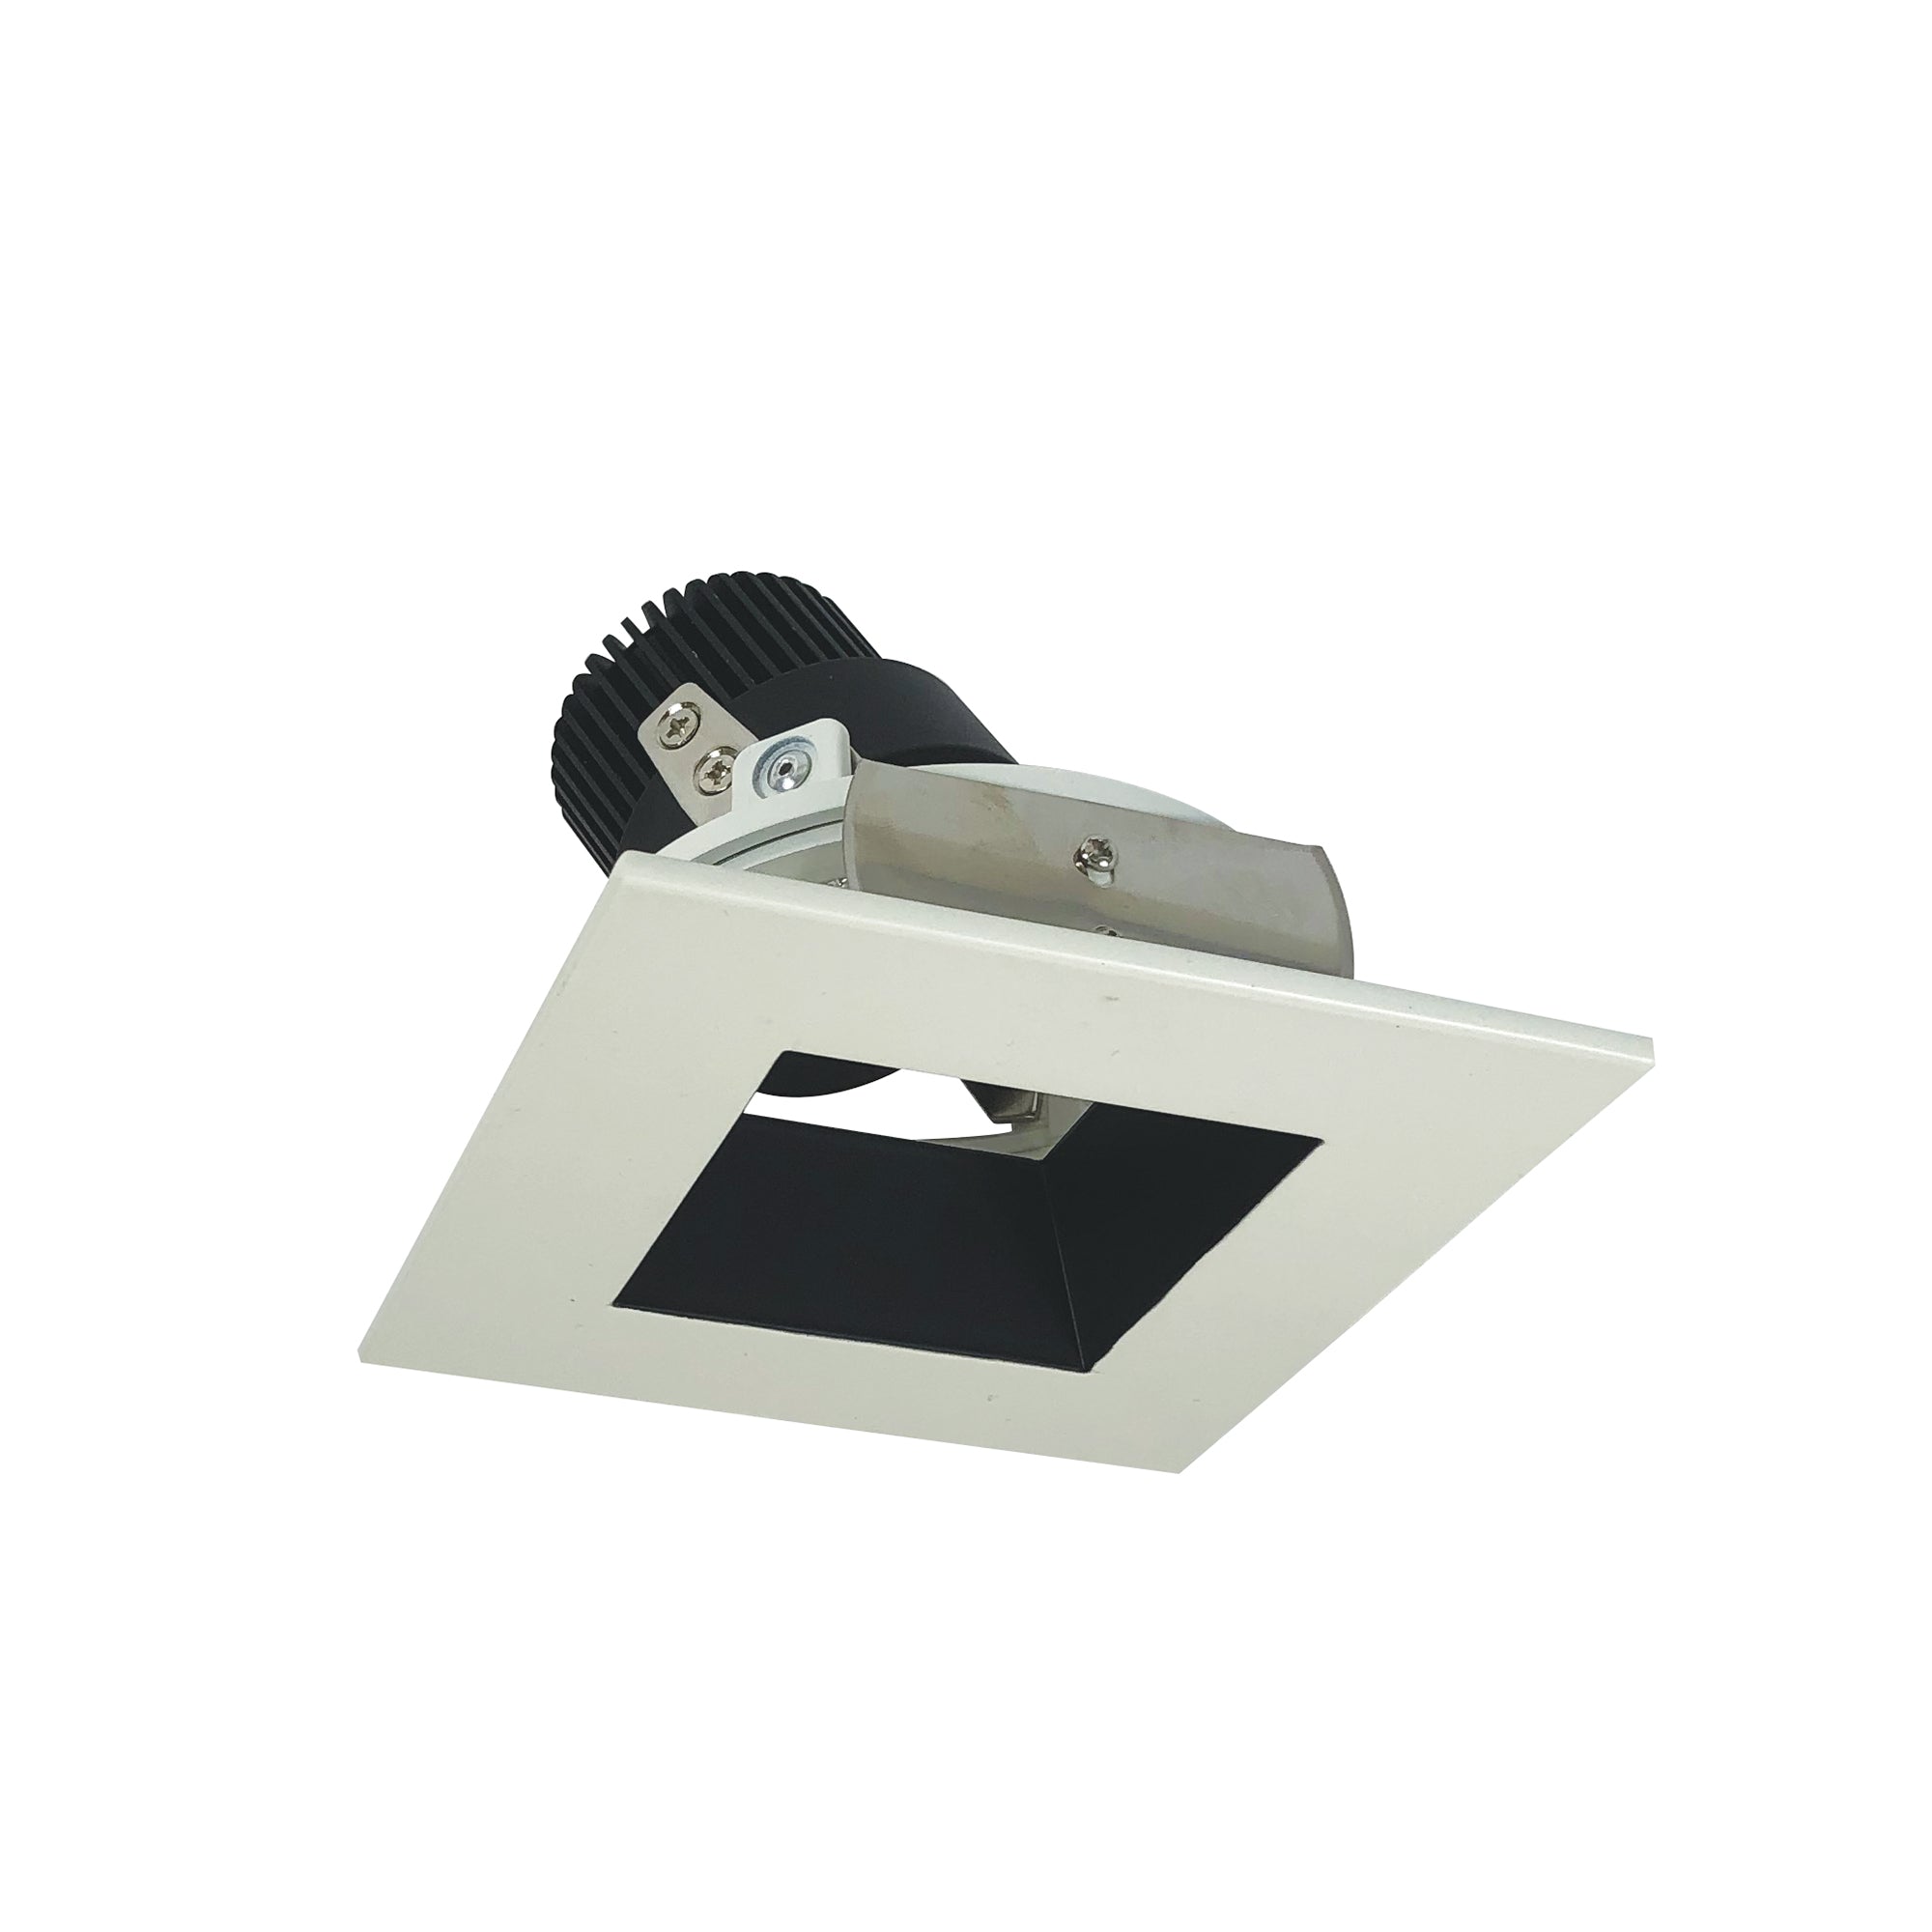 Nora Lighting NIO-4SDSQ30QBW 4" Iolite LED Square Adjustable Reflector With Square Aperture, 10-Degree Optic, 800lm / 12W, 3000K - Black Reflector / White Flange